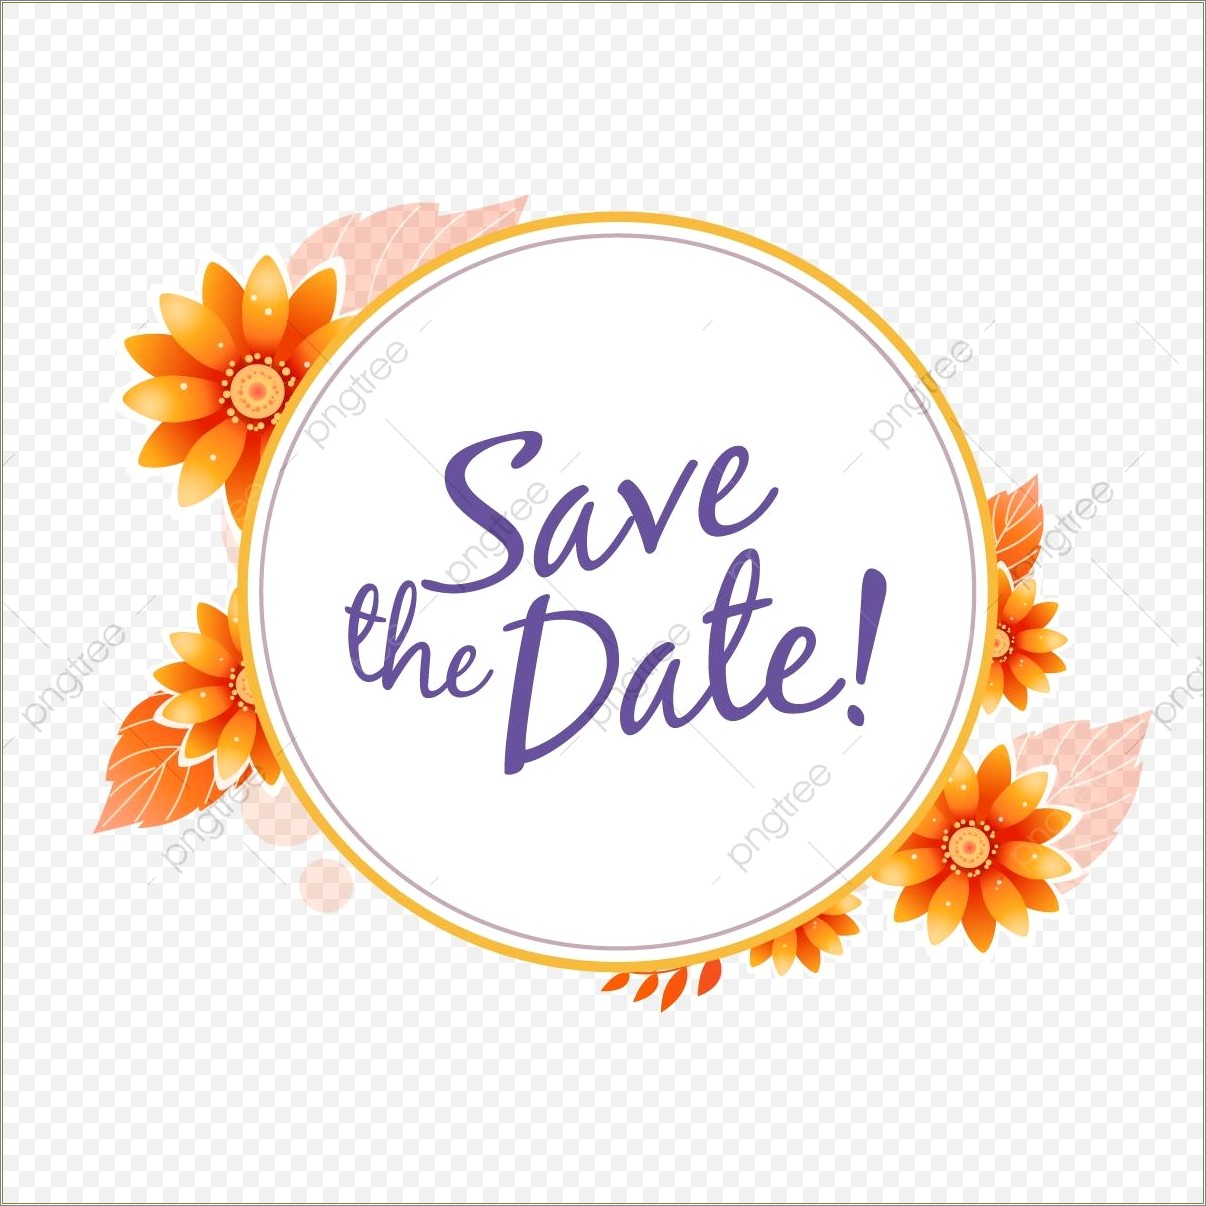 Free Save The Date Wedding Invitation Templates